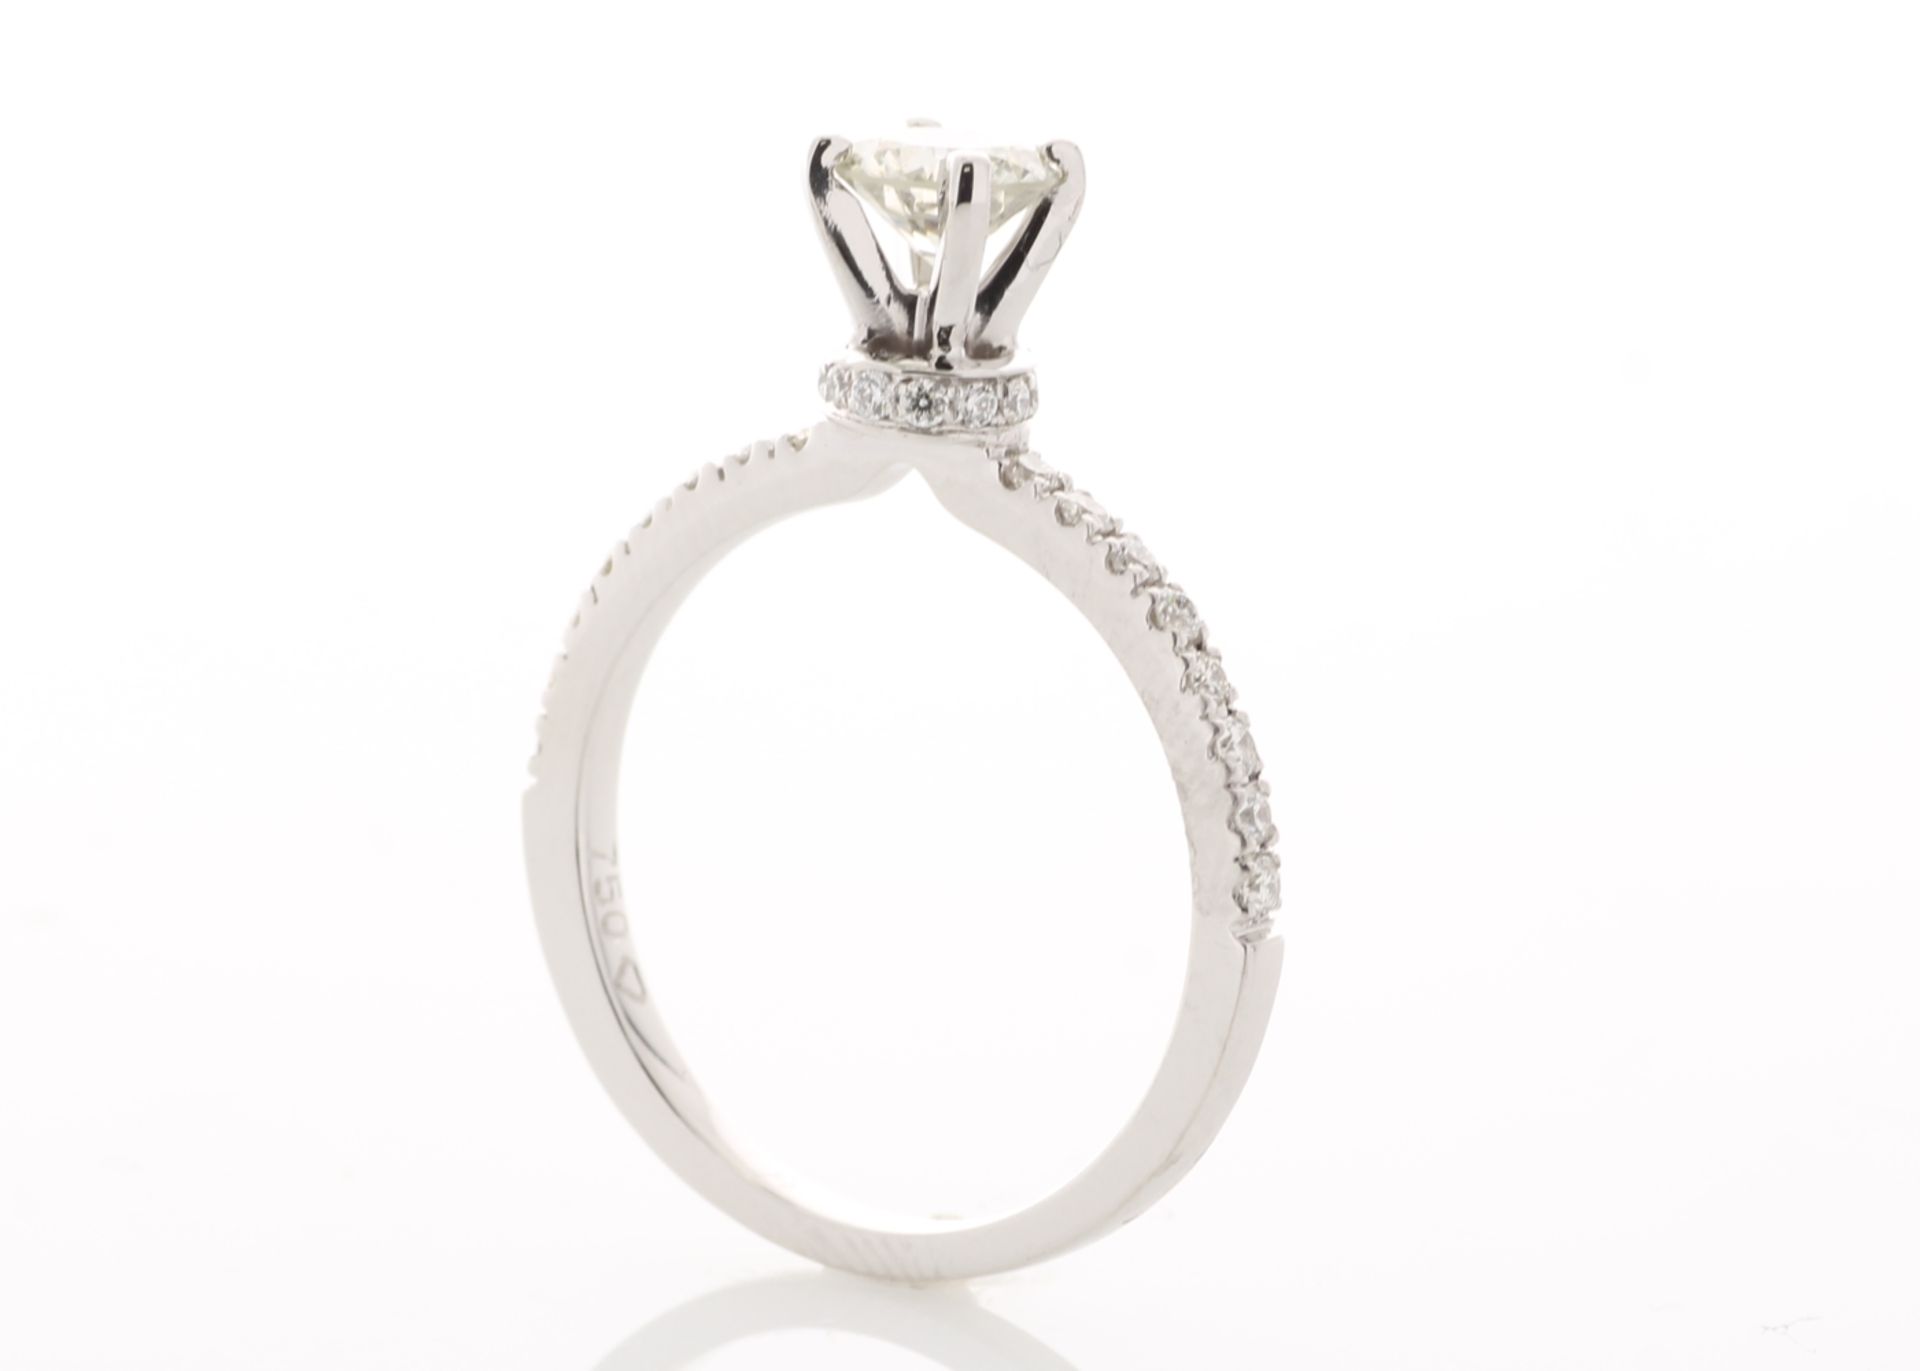 18ct White Gold Single Stone Prong Set With Stone Set Shoulders Diamond Ring (0.50) 0.73 Carats - Image 5 of 6